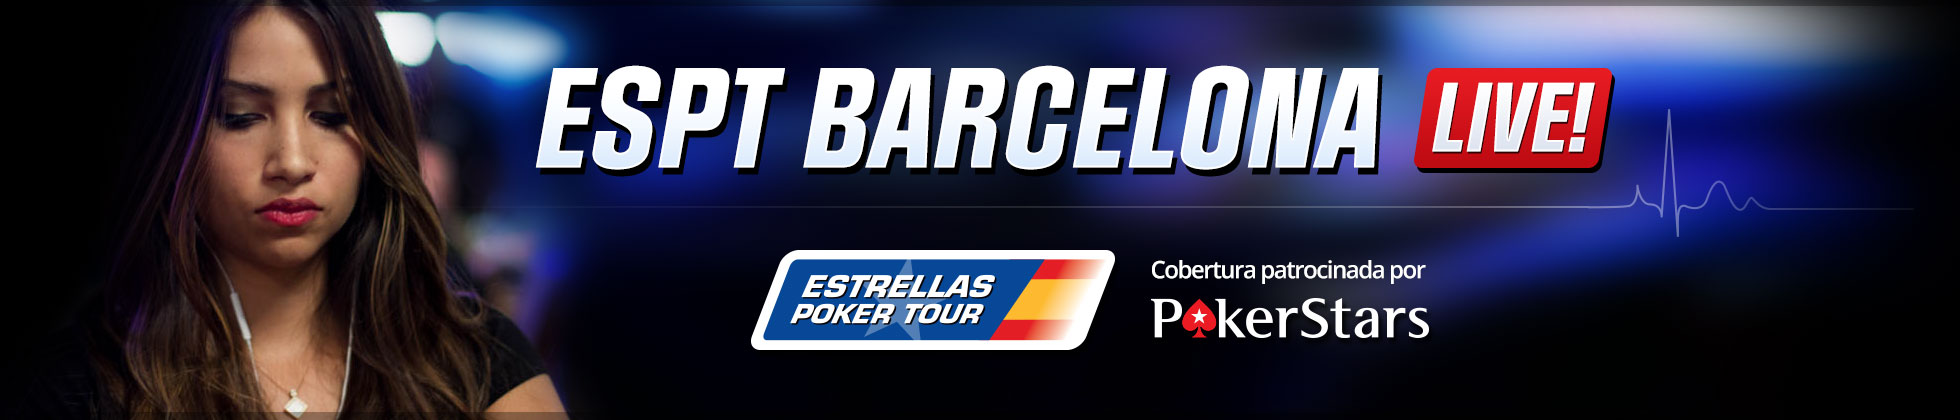 Estrellas Poker Tour Barcelona 2013